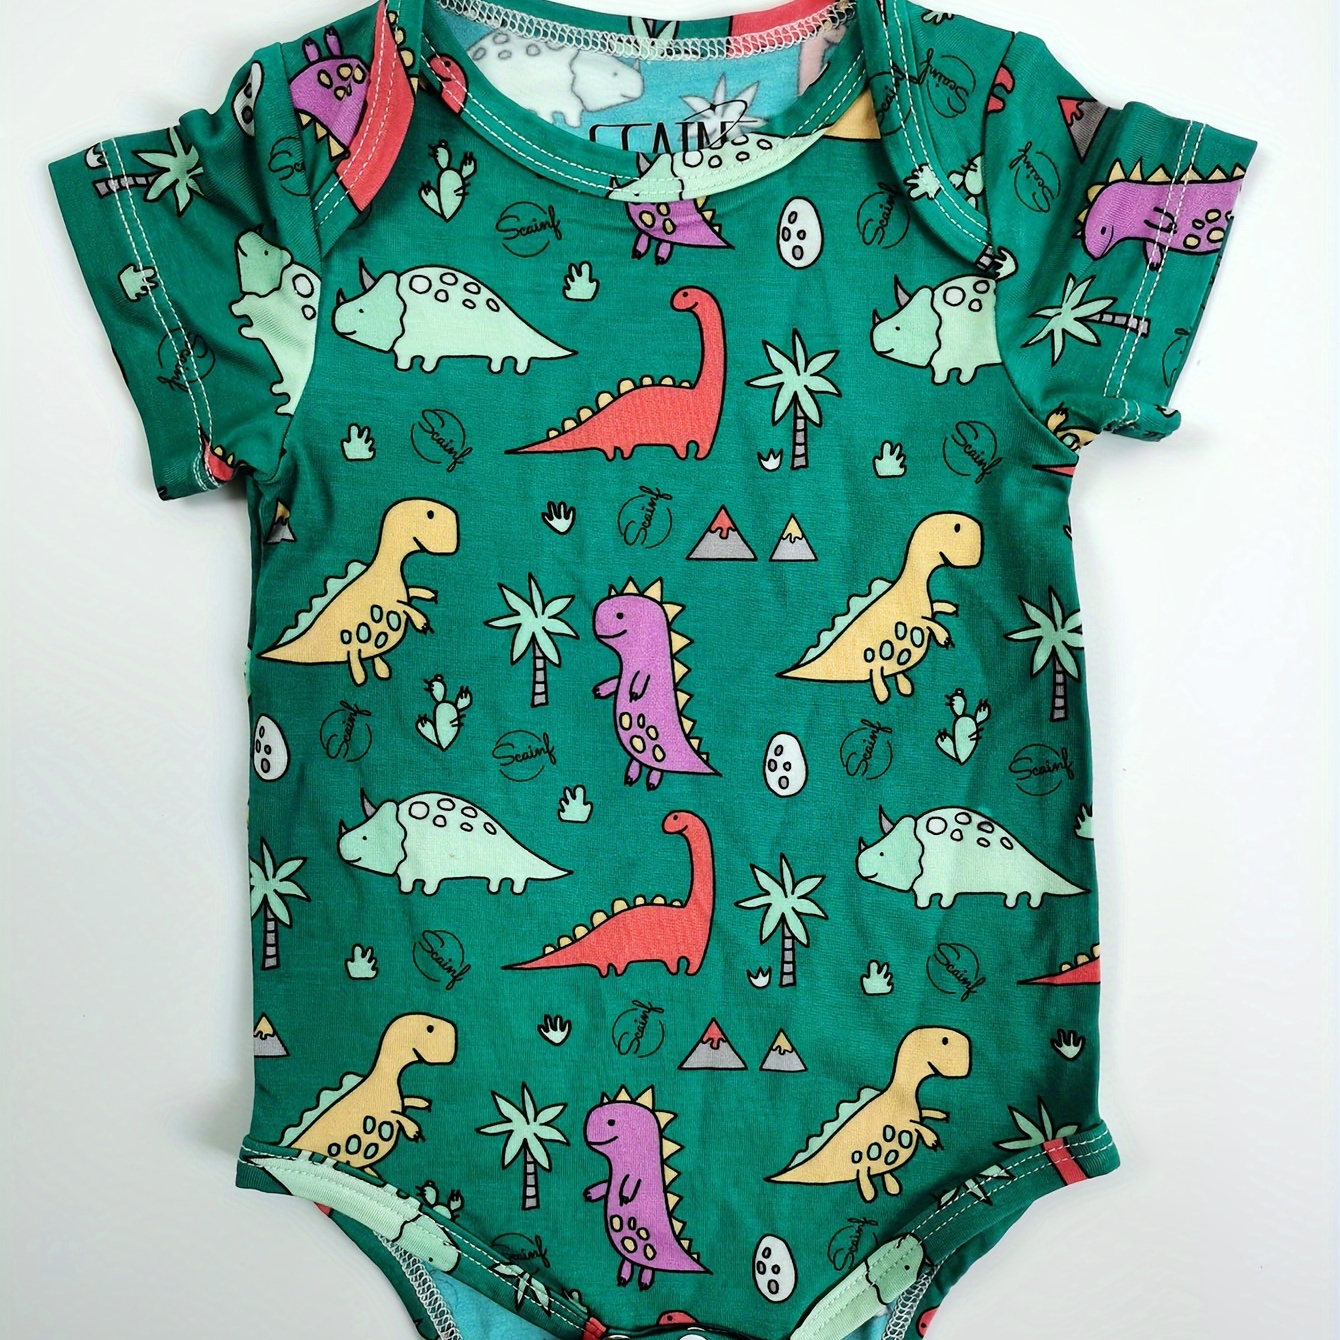 

Toddler Onesie, Bamboo Fabric, Cute Dinosaur & Palm Tree Print, Infant Bodysuit Romper, Comfortable Snap Closure, Unisex Design For Boys & Girls